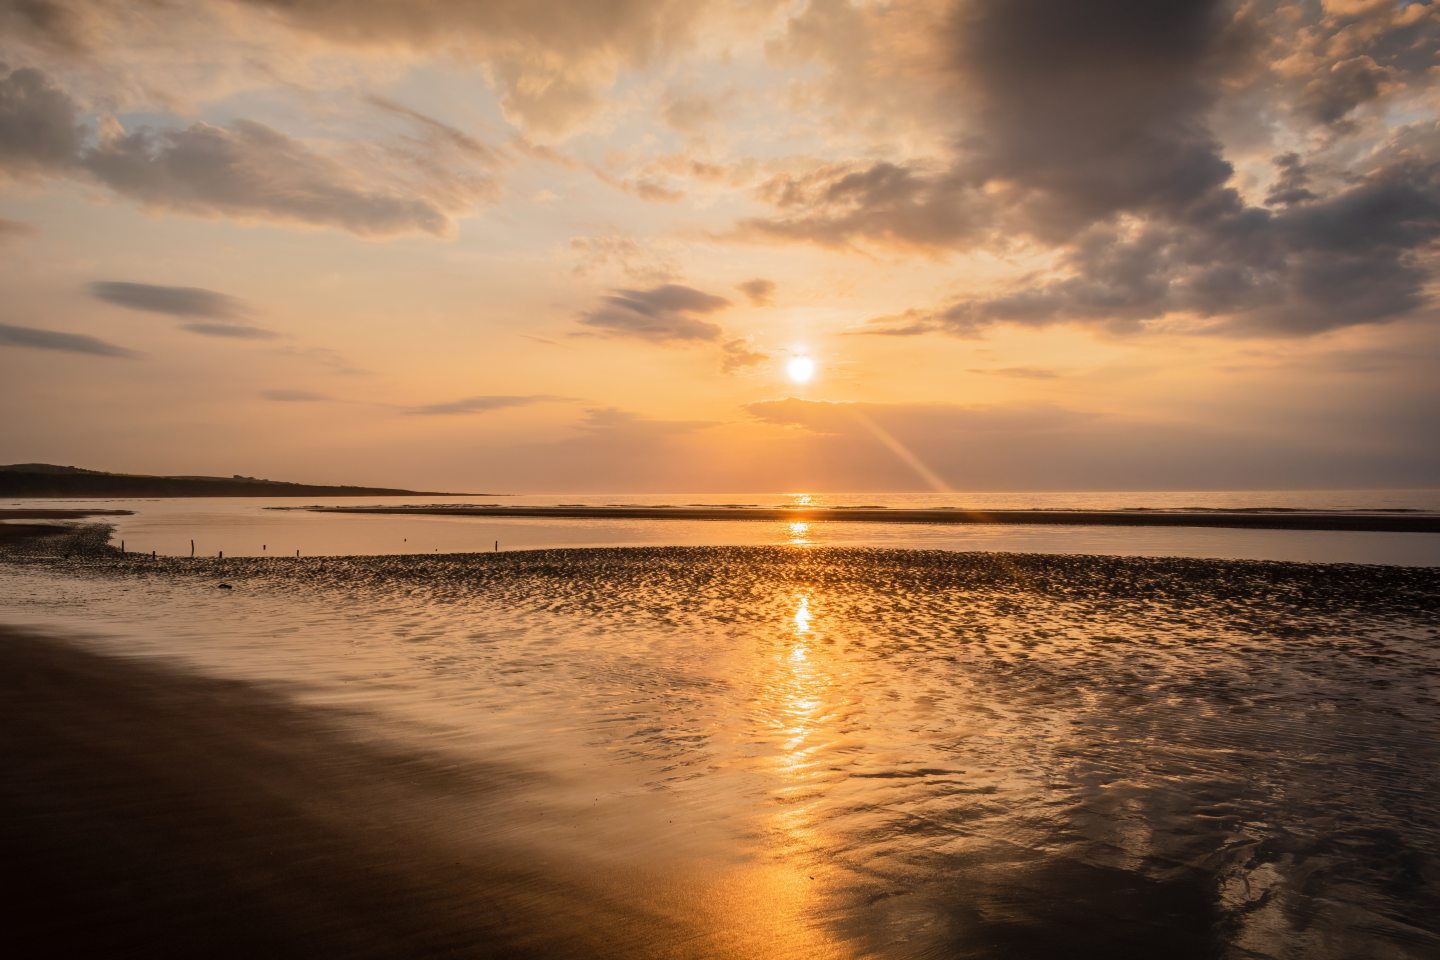 Sunrise at St Cryus beach, Aberdeenshire.